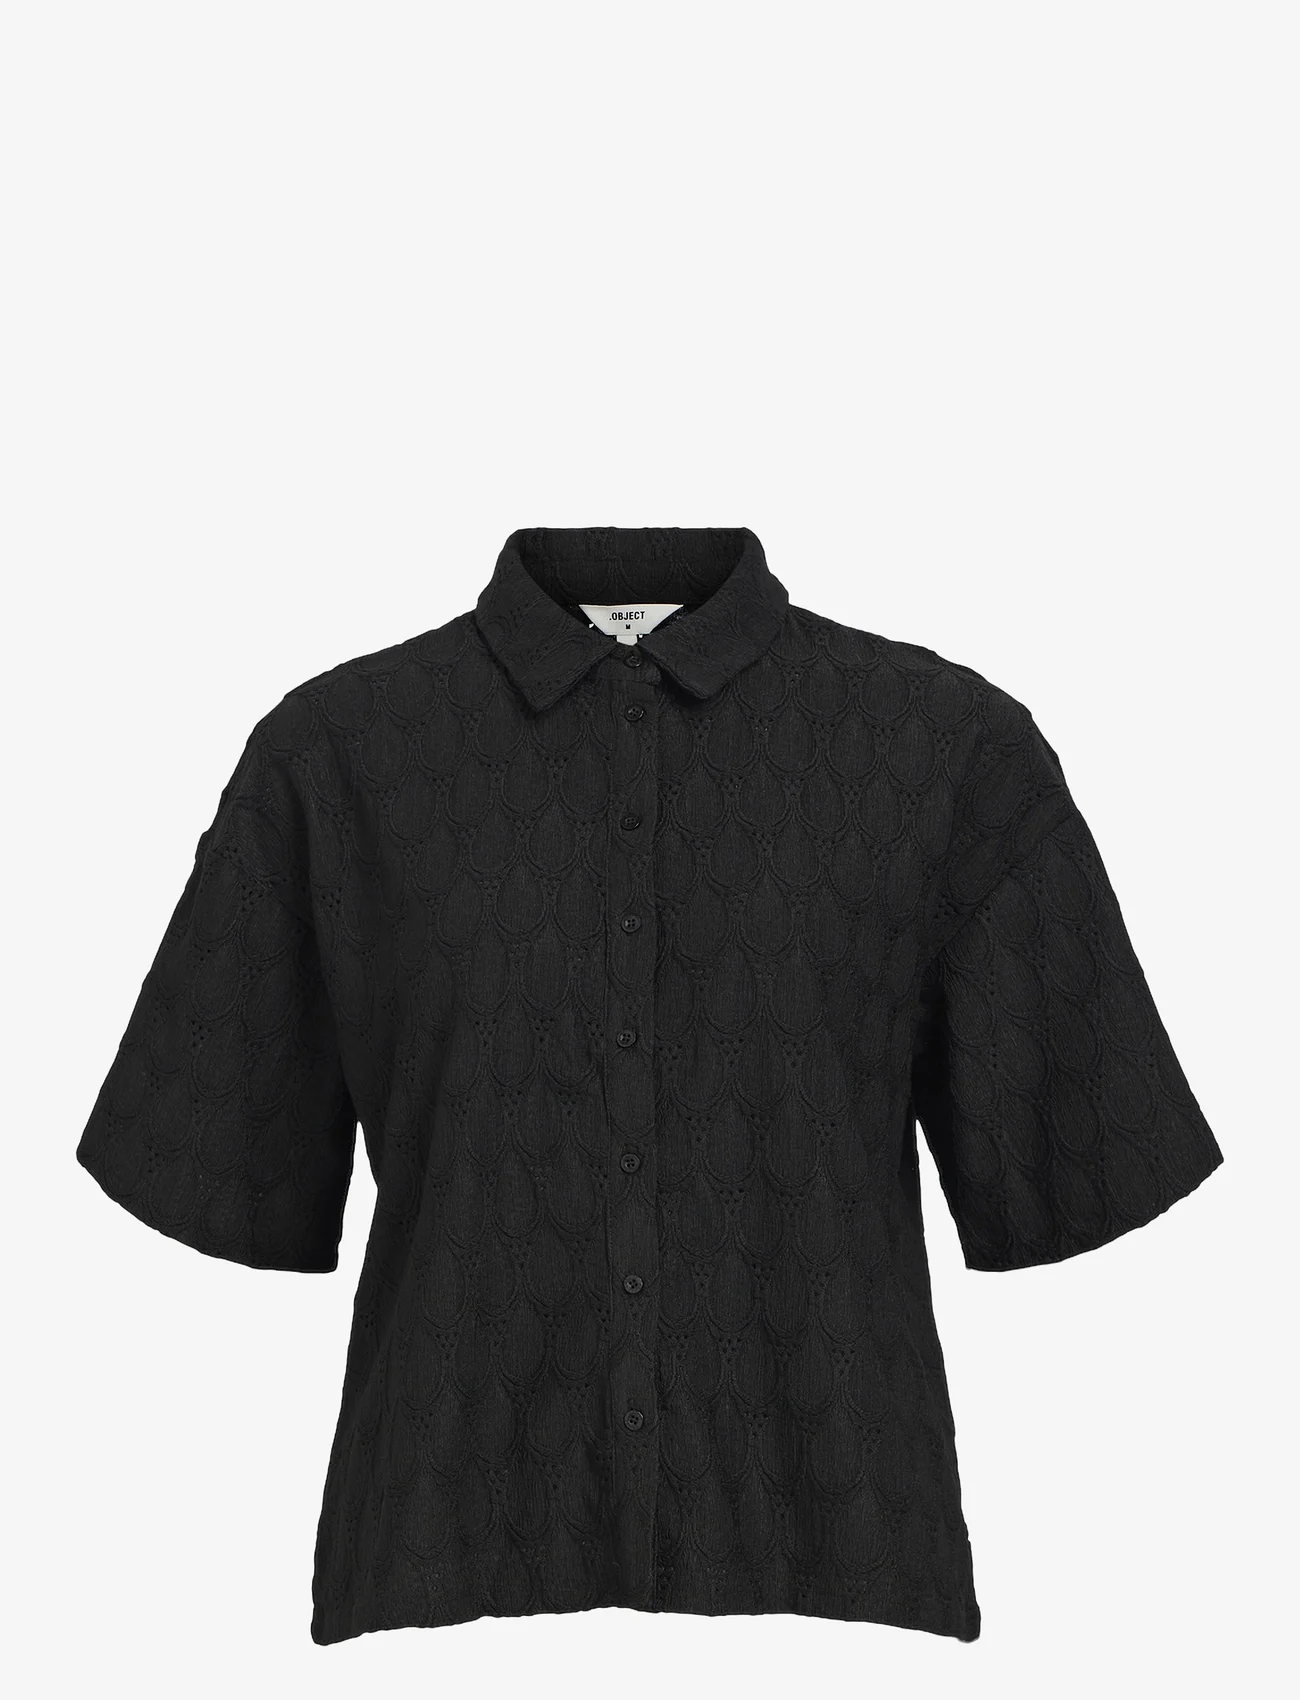 Object - OBJFEODORA 2/4 SLEEVE SHIRT DIV - short-sleeved shirts - black - 1